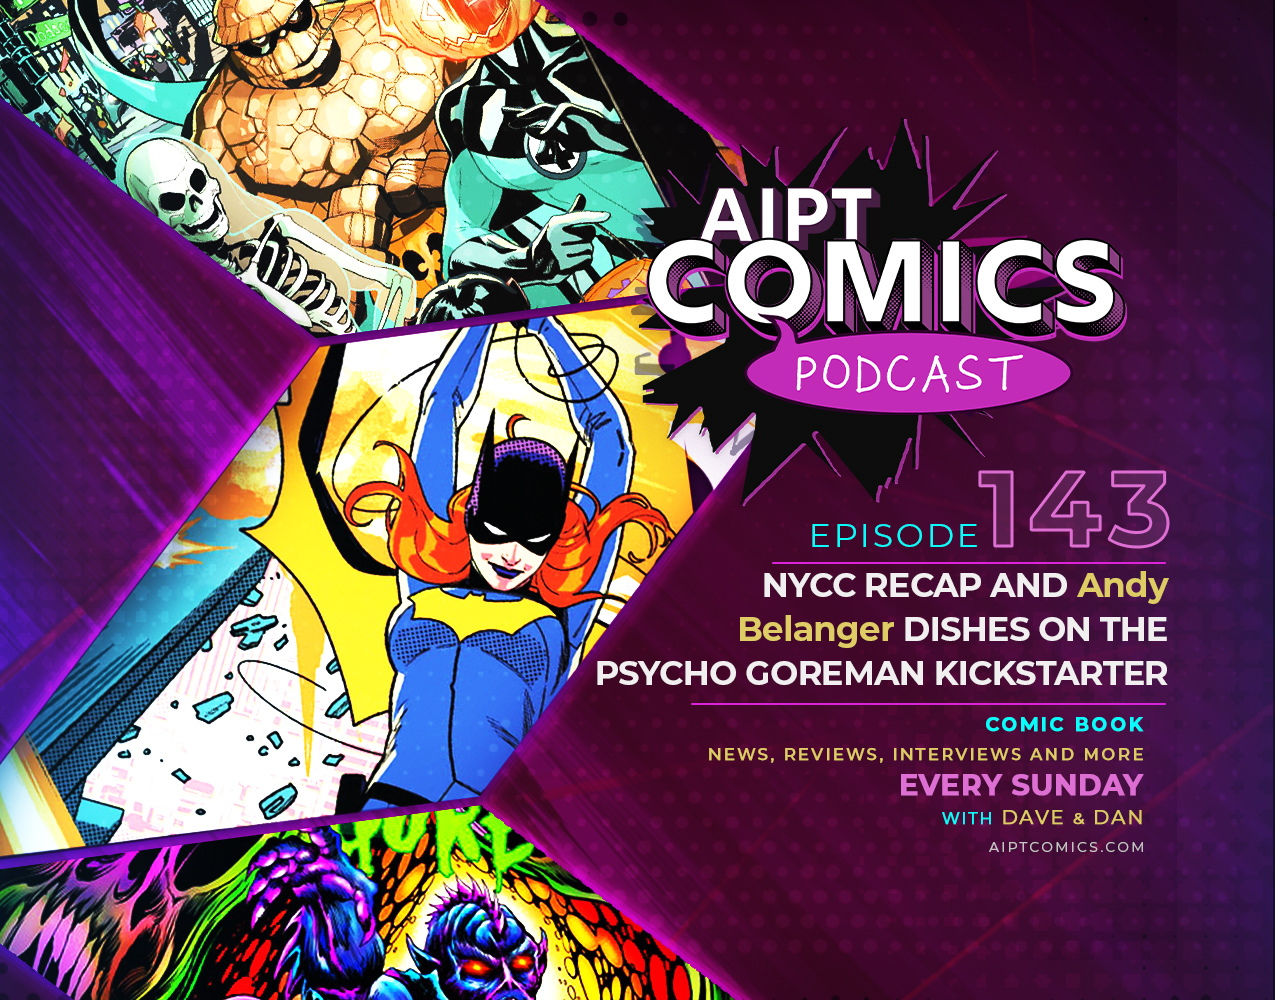 AIPT Comics Podcast episode 143: NYCC recap and Andy Belanger dishes on 'Psycho Goreman' Kickstarter